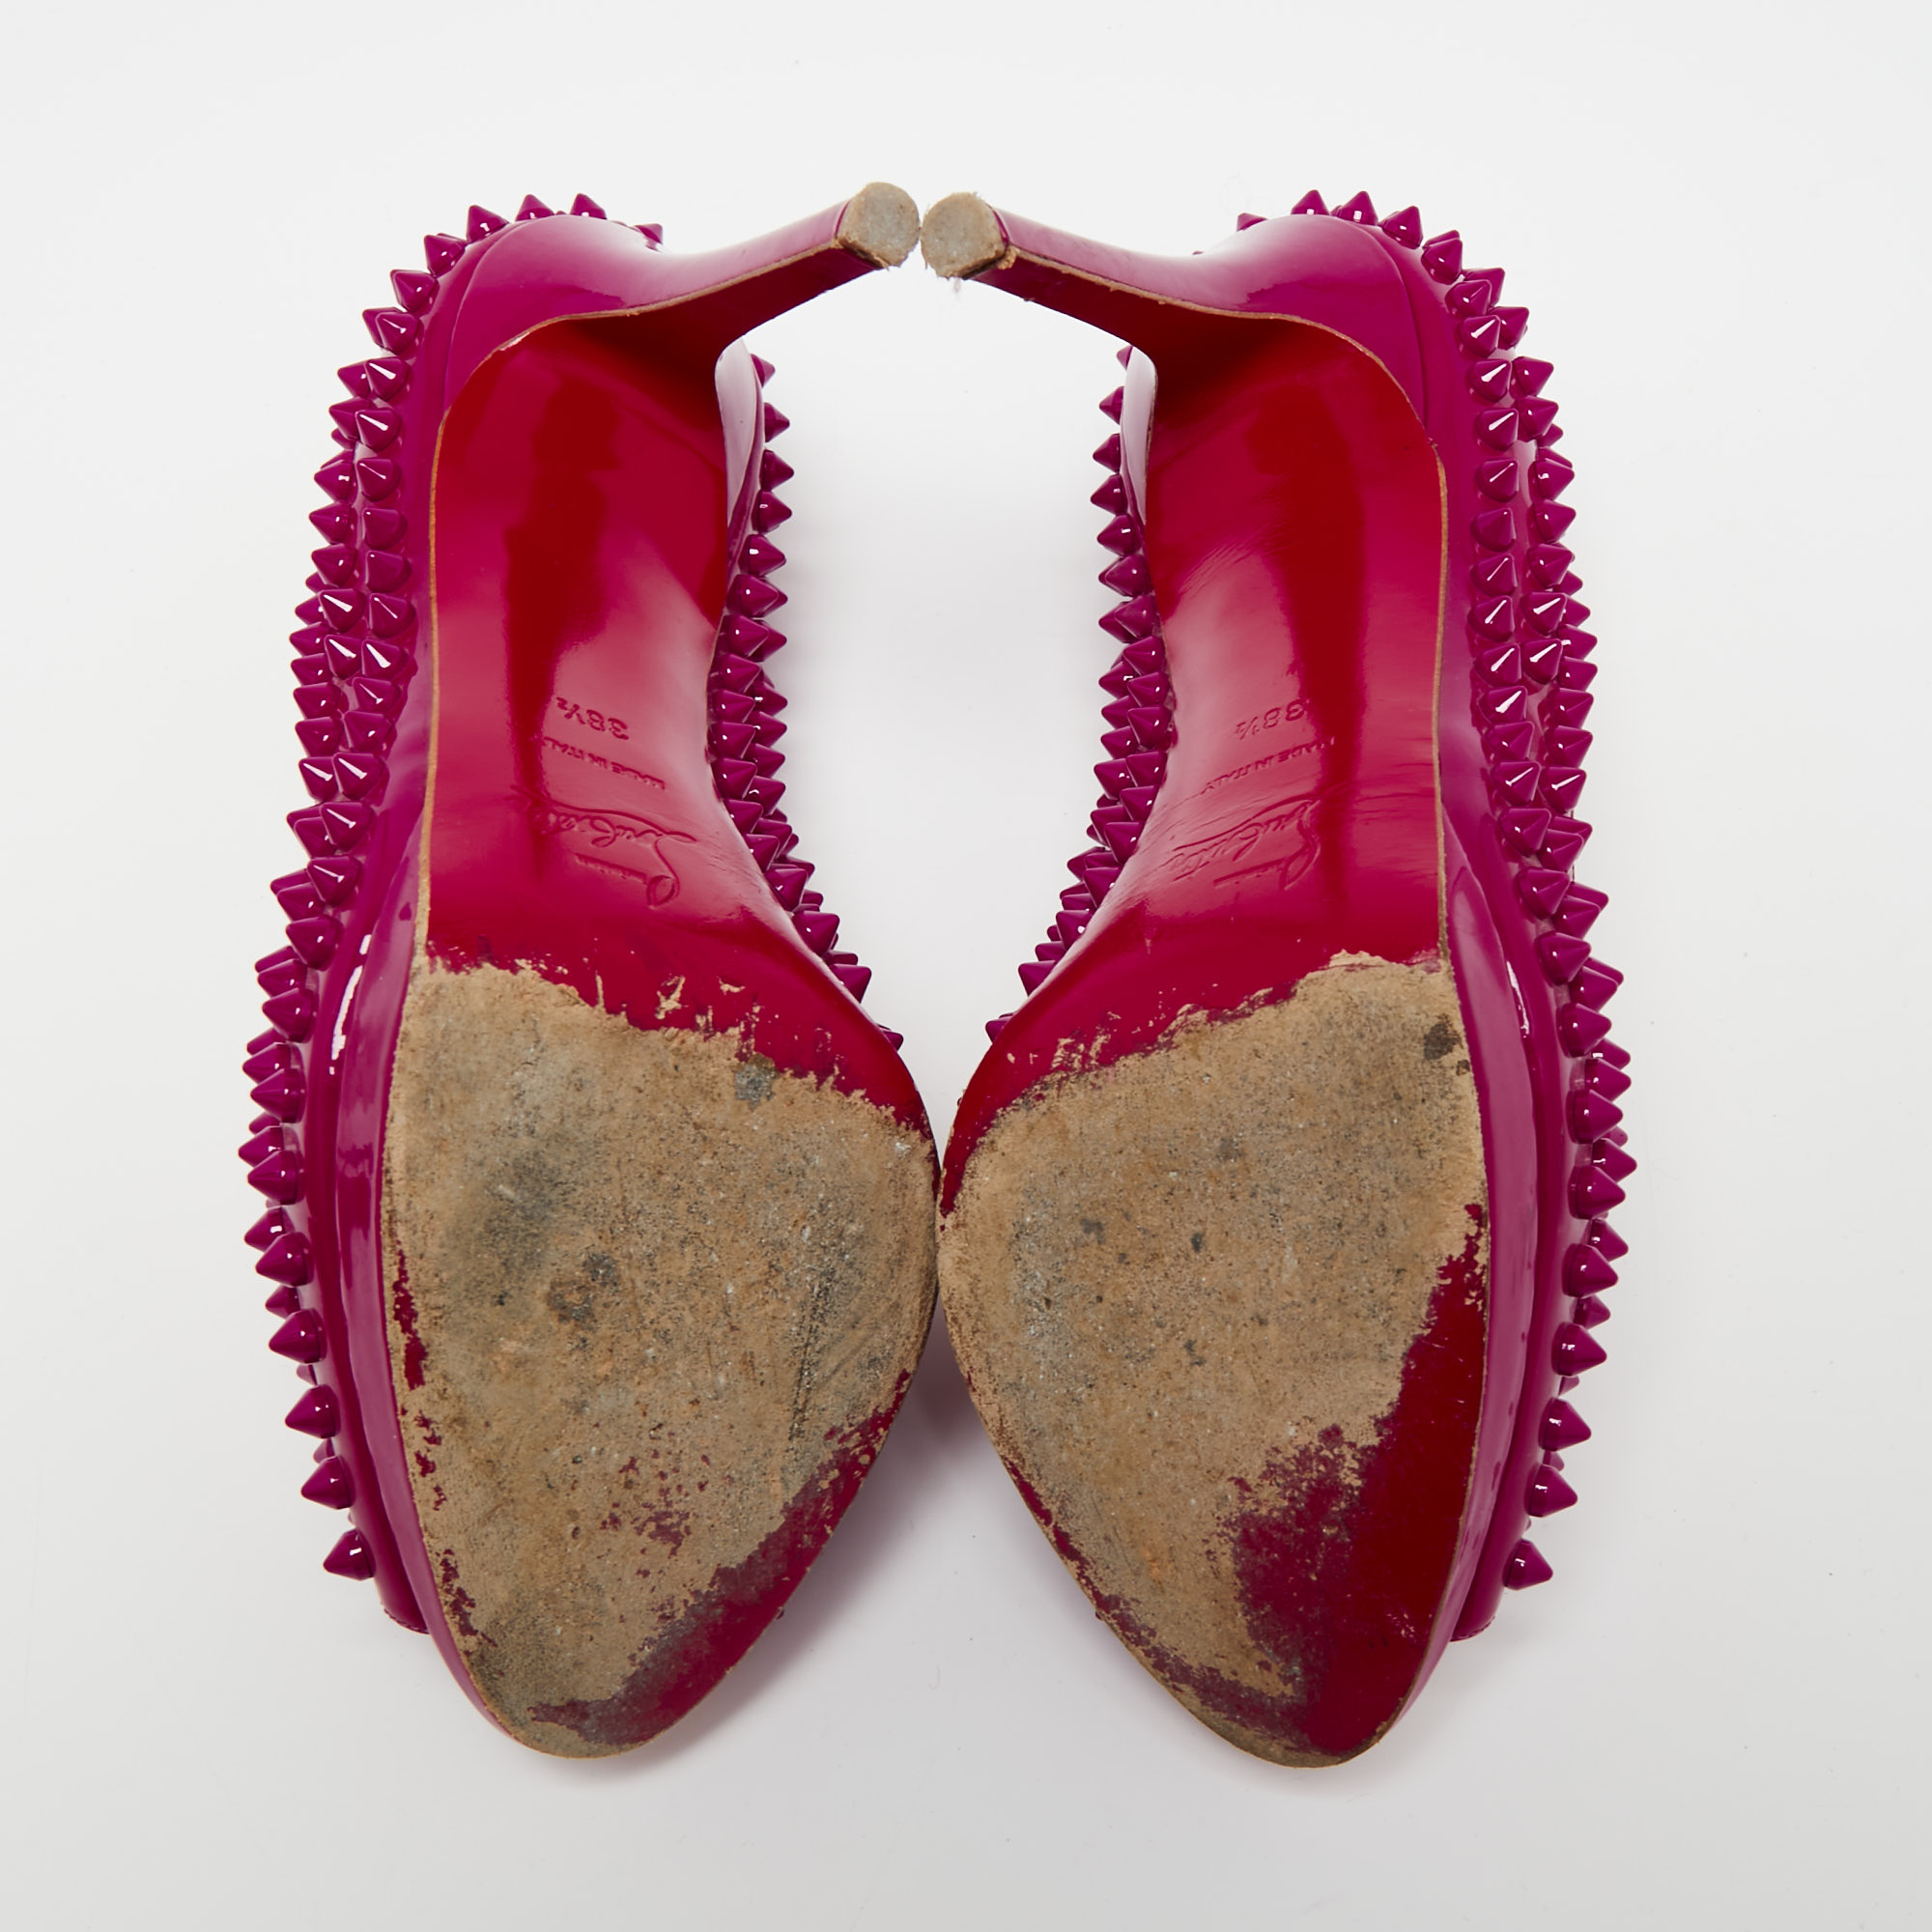 Christian Louboutin Hot Pink Patent Leather Yolanda Spiked Peep-Toe Pumps Size 38.5